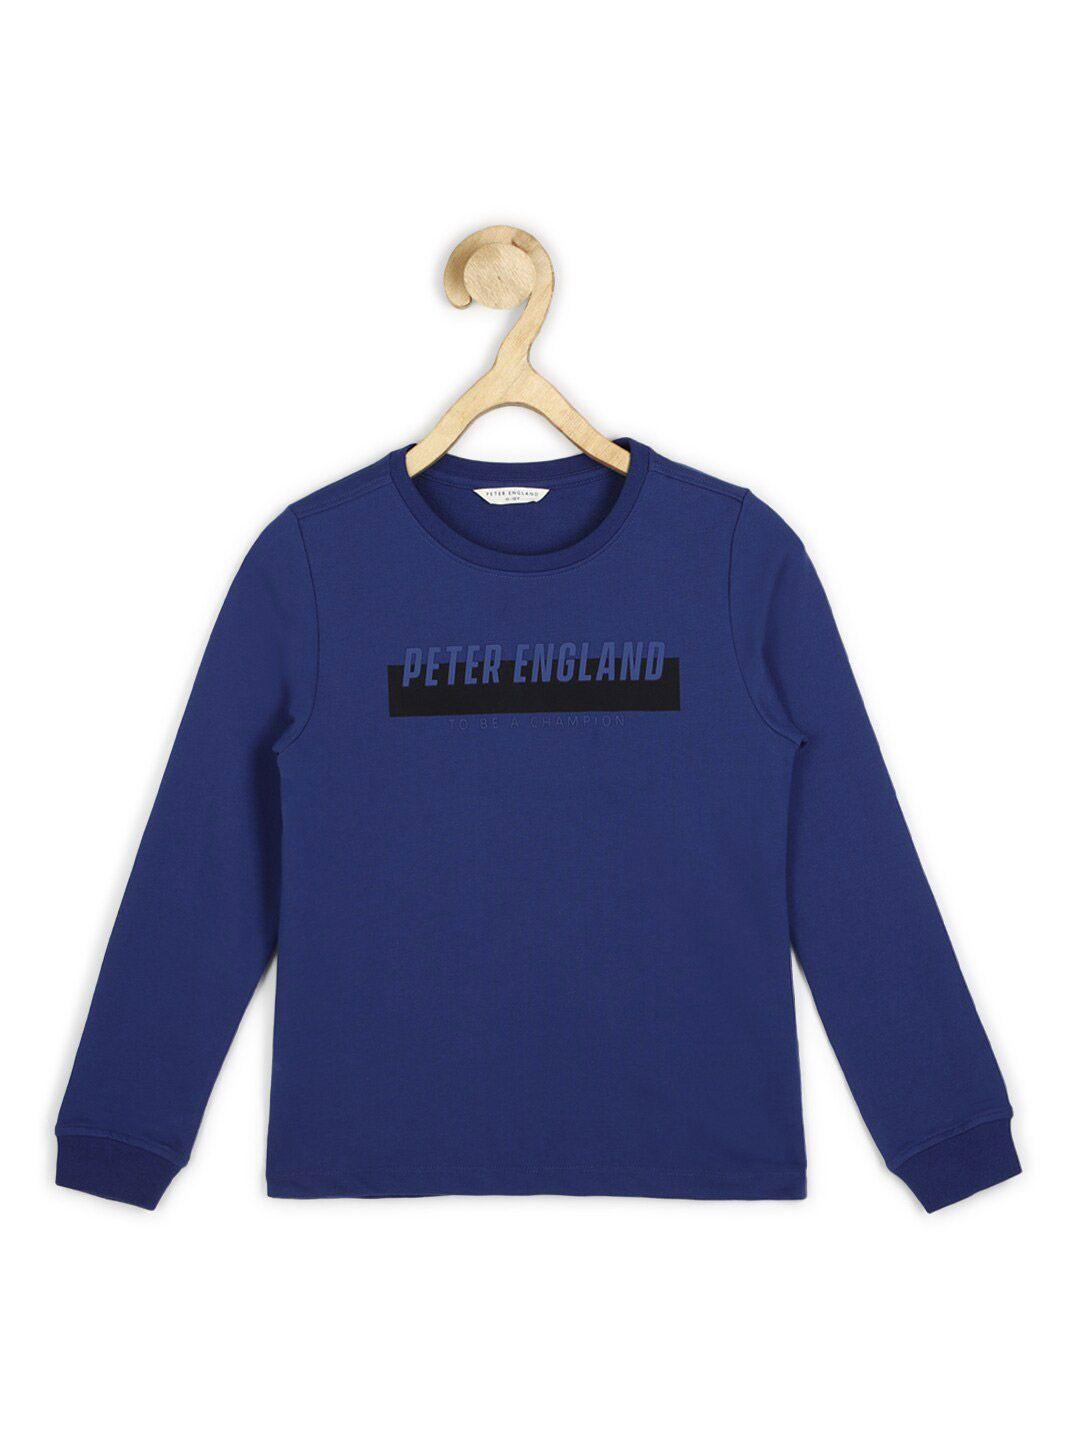 peter england boys blue pure cotton sweatshirt